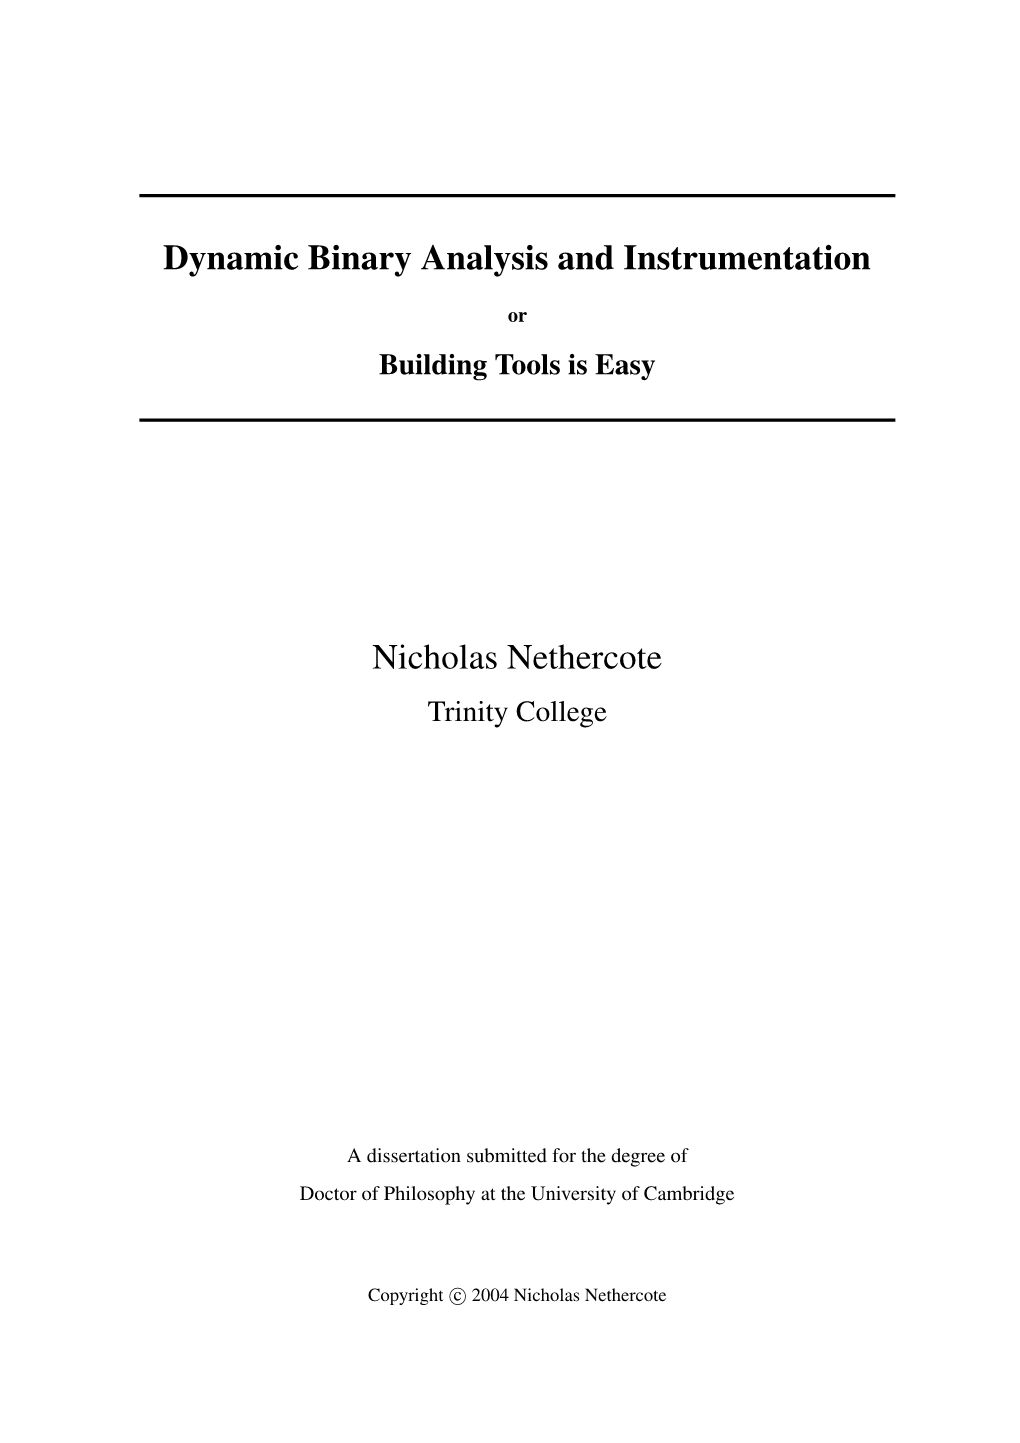 Dynamic Binary Analysis and Instrumentation Nicholas Nethercote